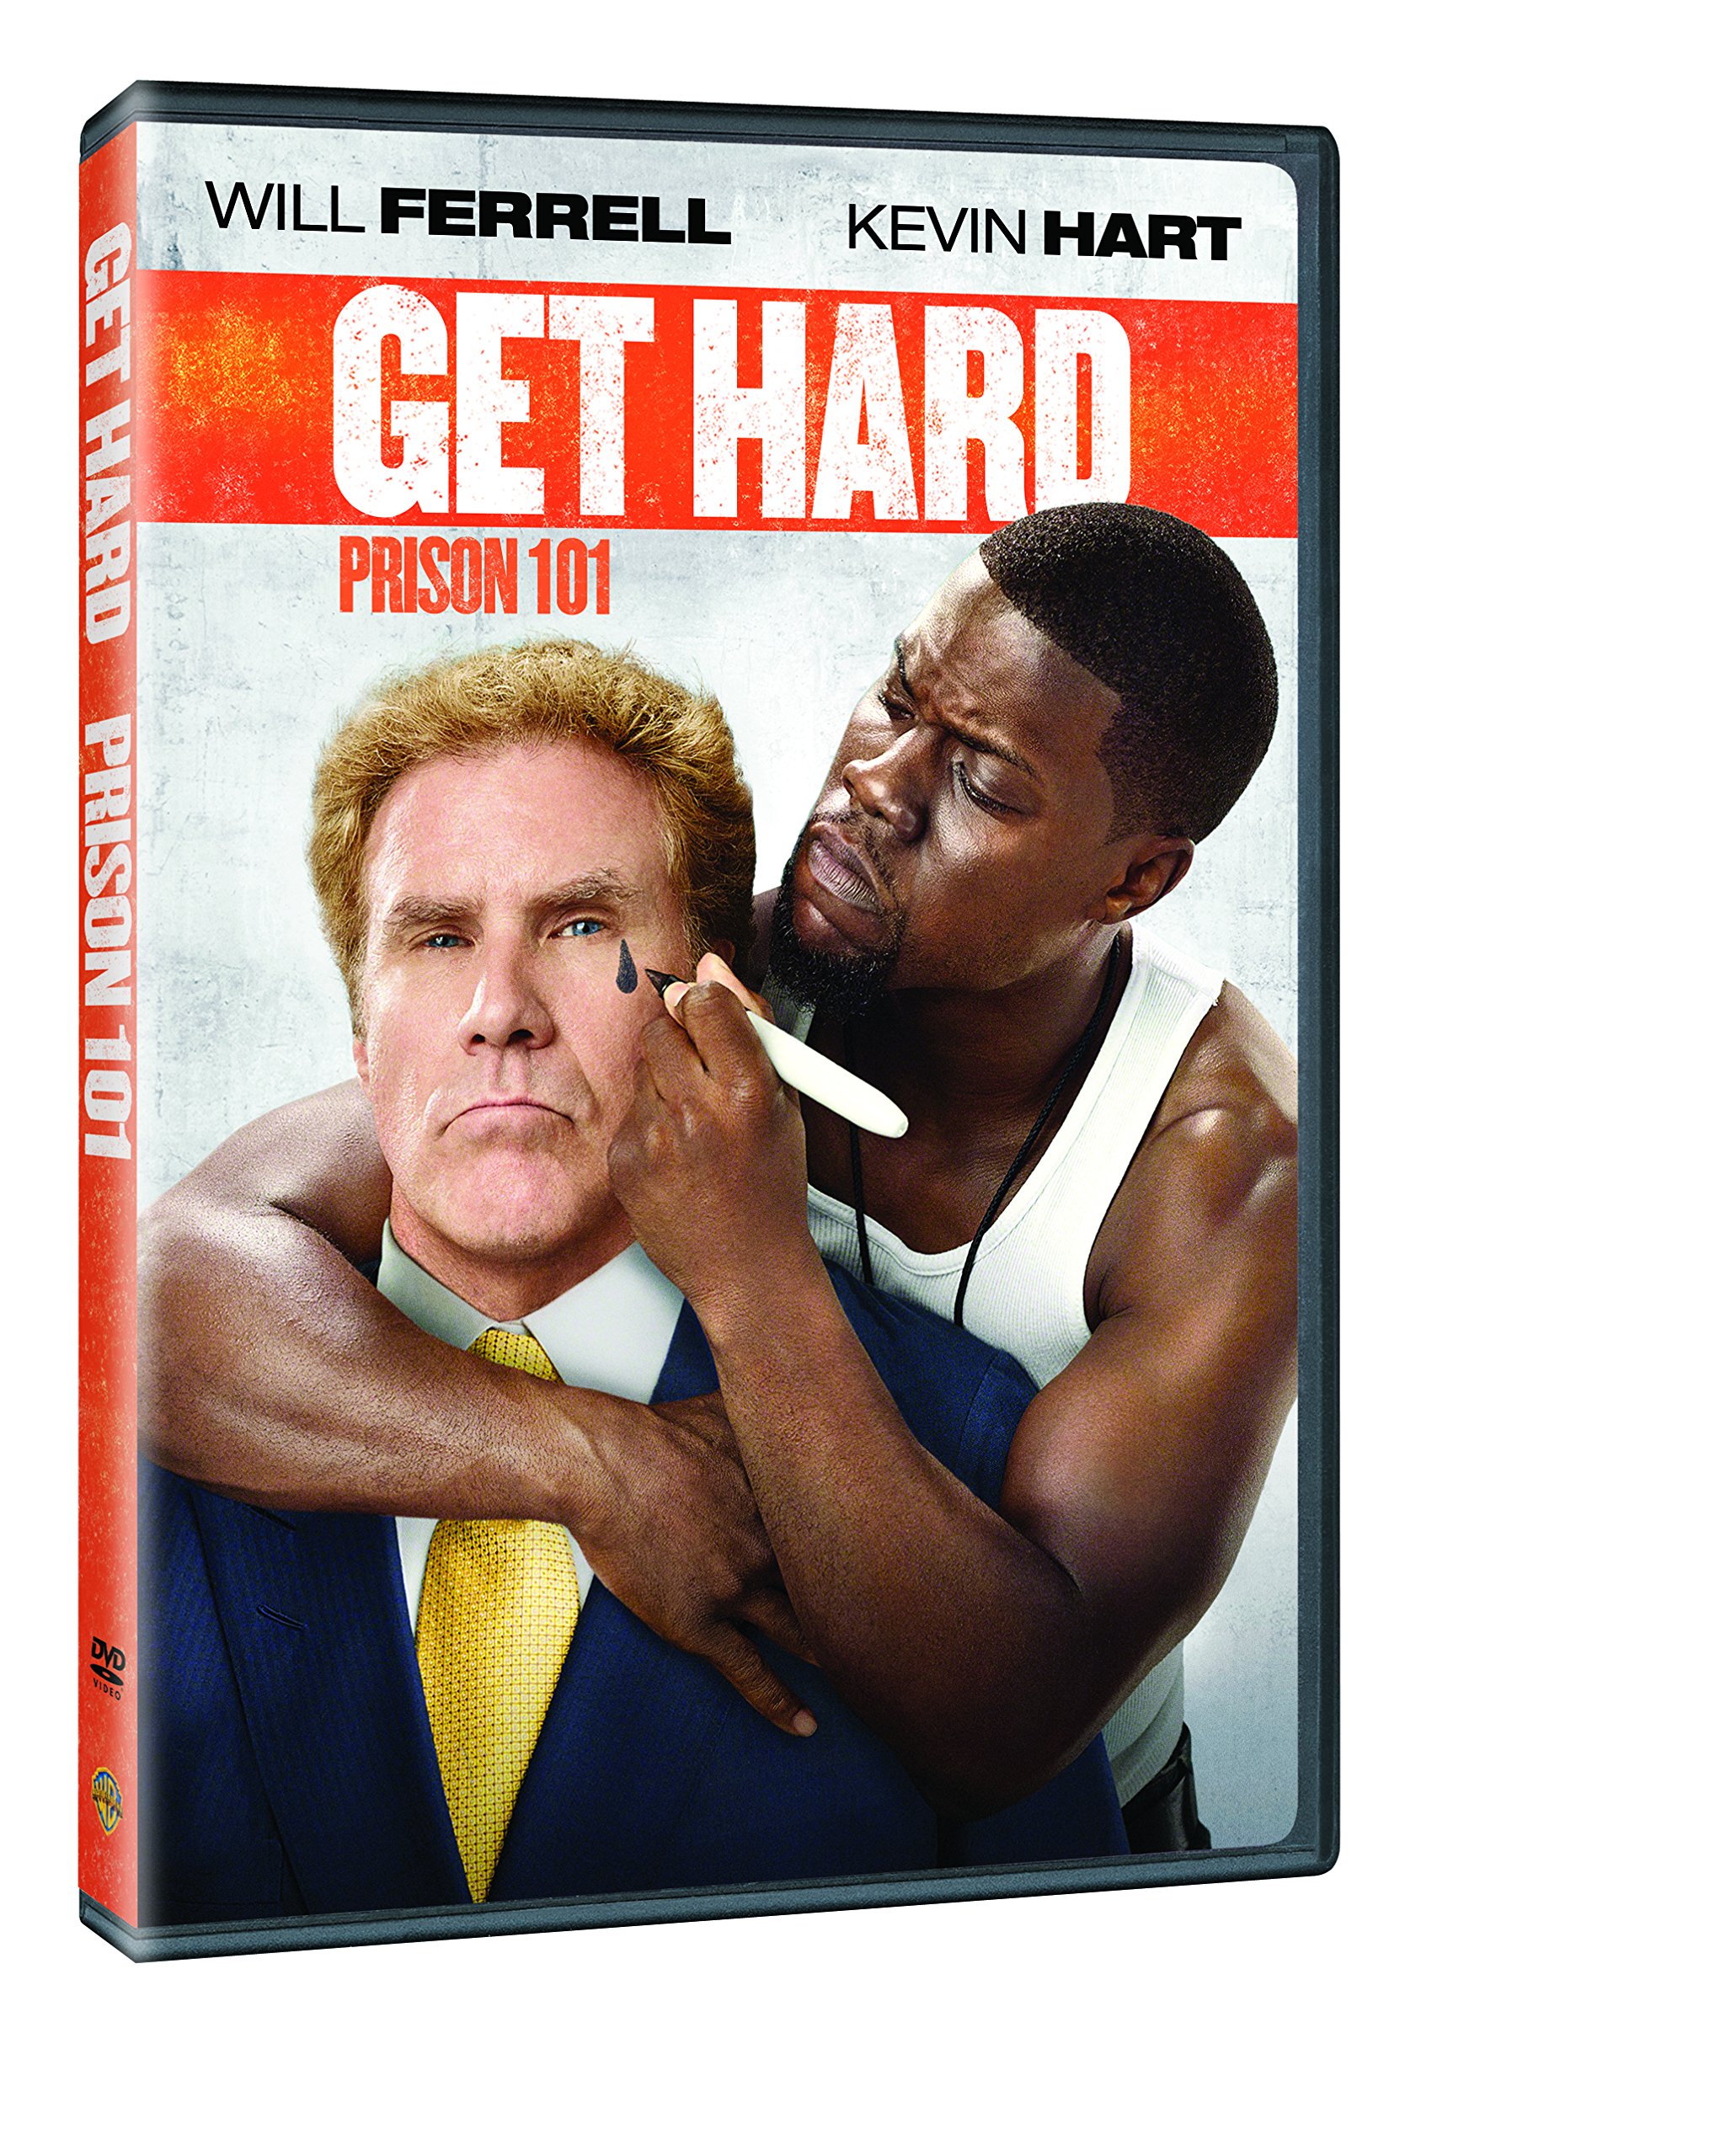 Get Hard [DVD + Digital Copy] (Bilingual) on MovieShack